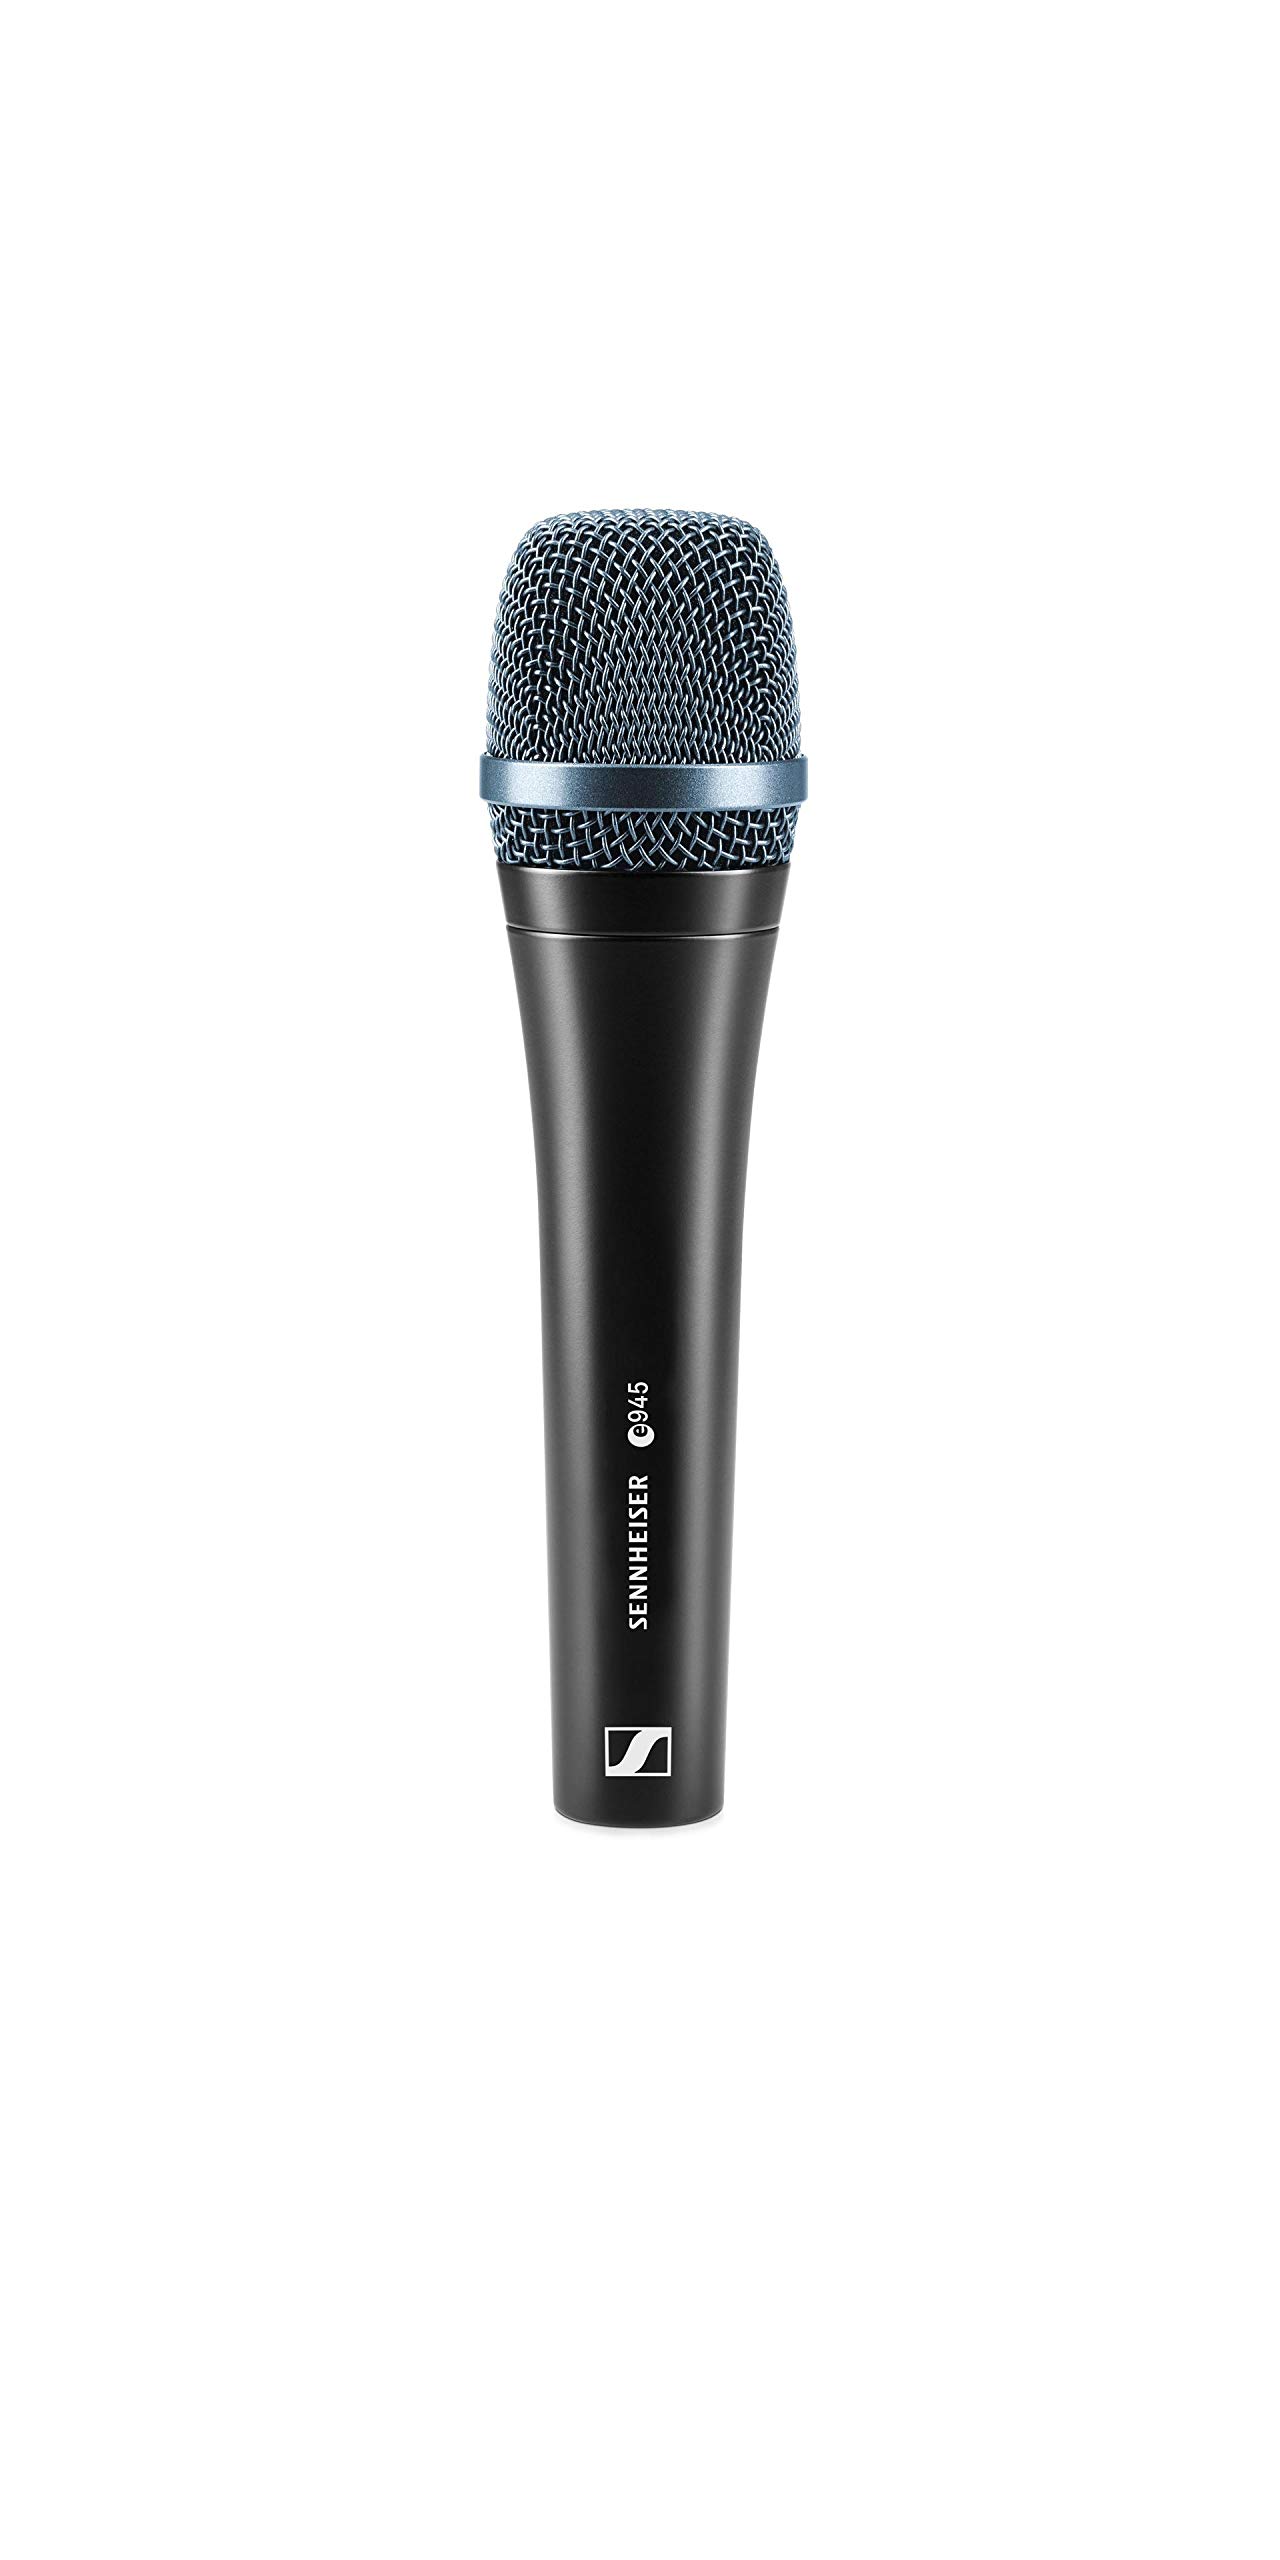 Sennheiser Pro Audio Profesjonalny dynamiczny mikrofon wokalny o superkardioidalnej charakterystyce E 945